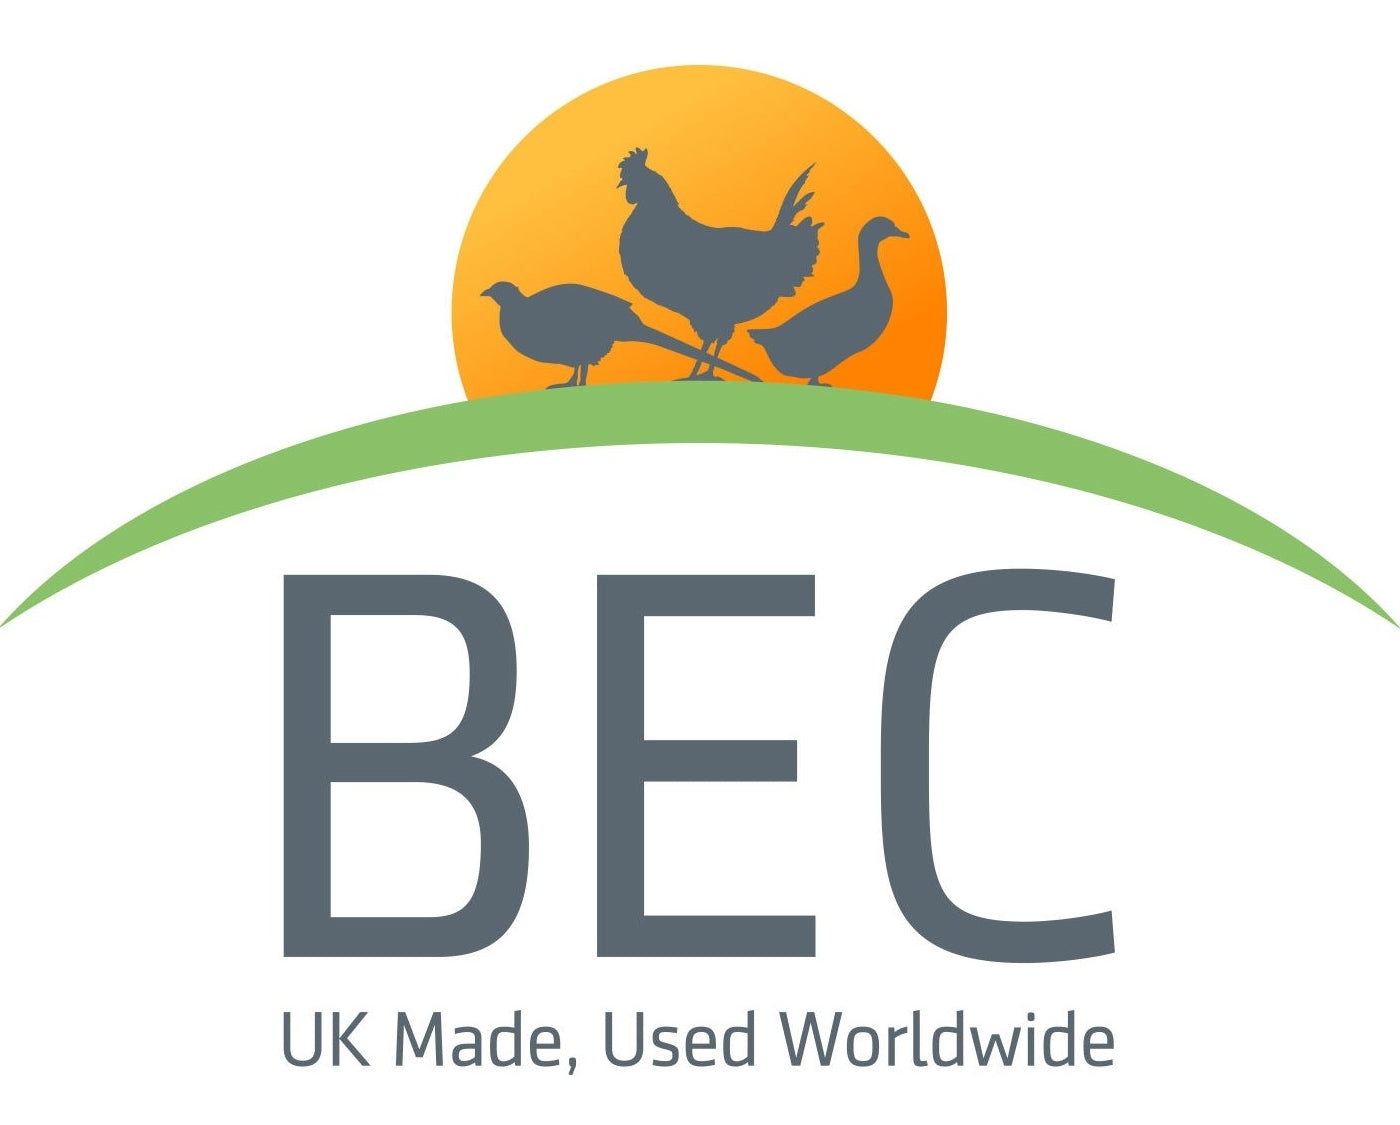 BEC - Poultry Feeders - Buy Online SPR Centre UK